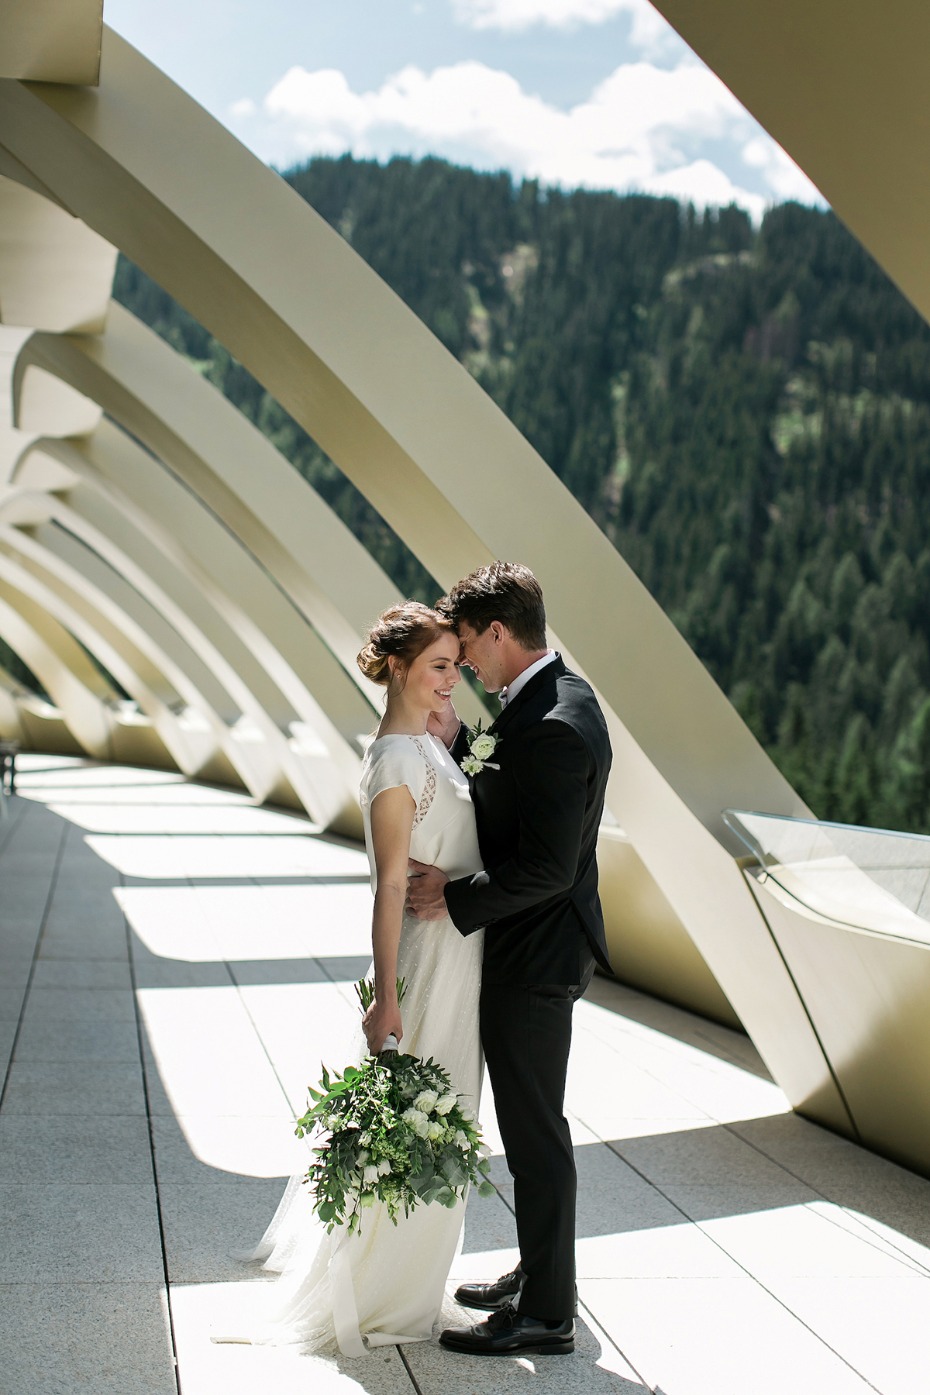 Lets get married in Switzerland